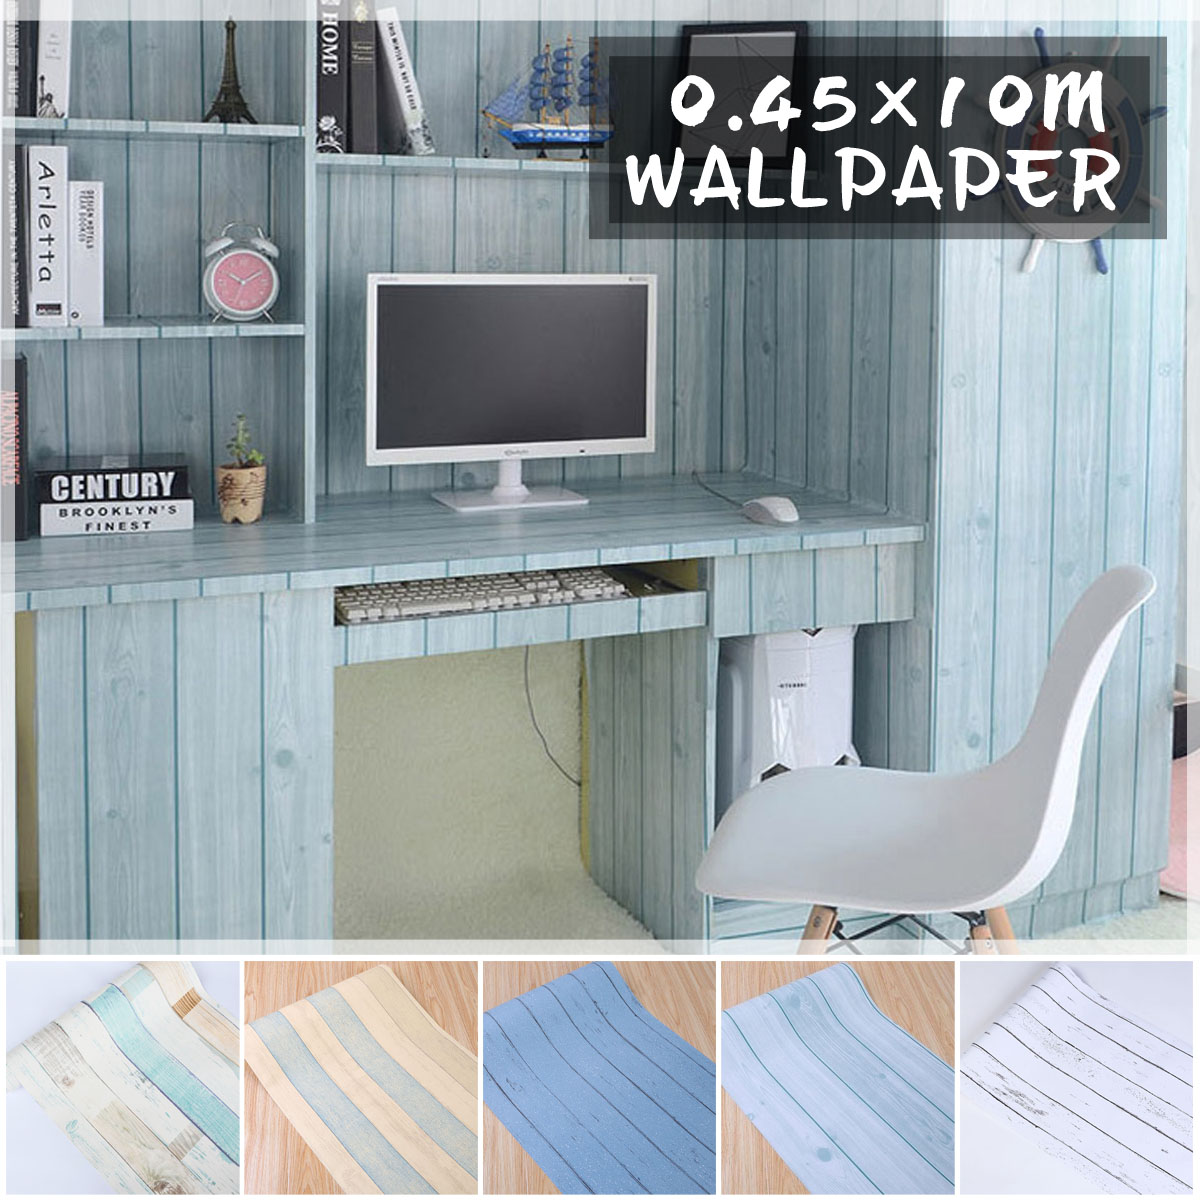 Waterproof-Wall-Sticker-for-Living-Room-Bedroom-DIY-Wall-Decor-Self-Adhesive-1700054-1